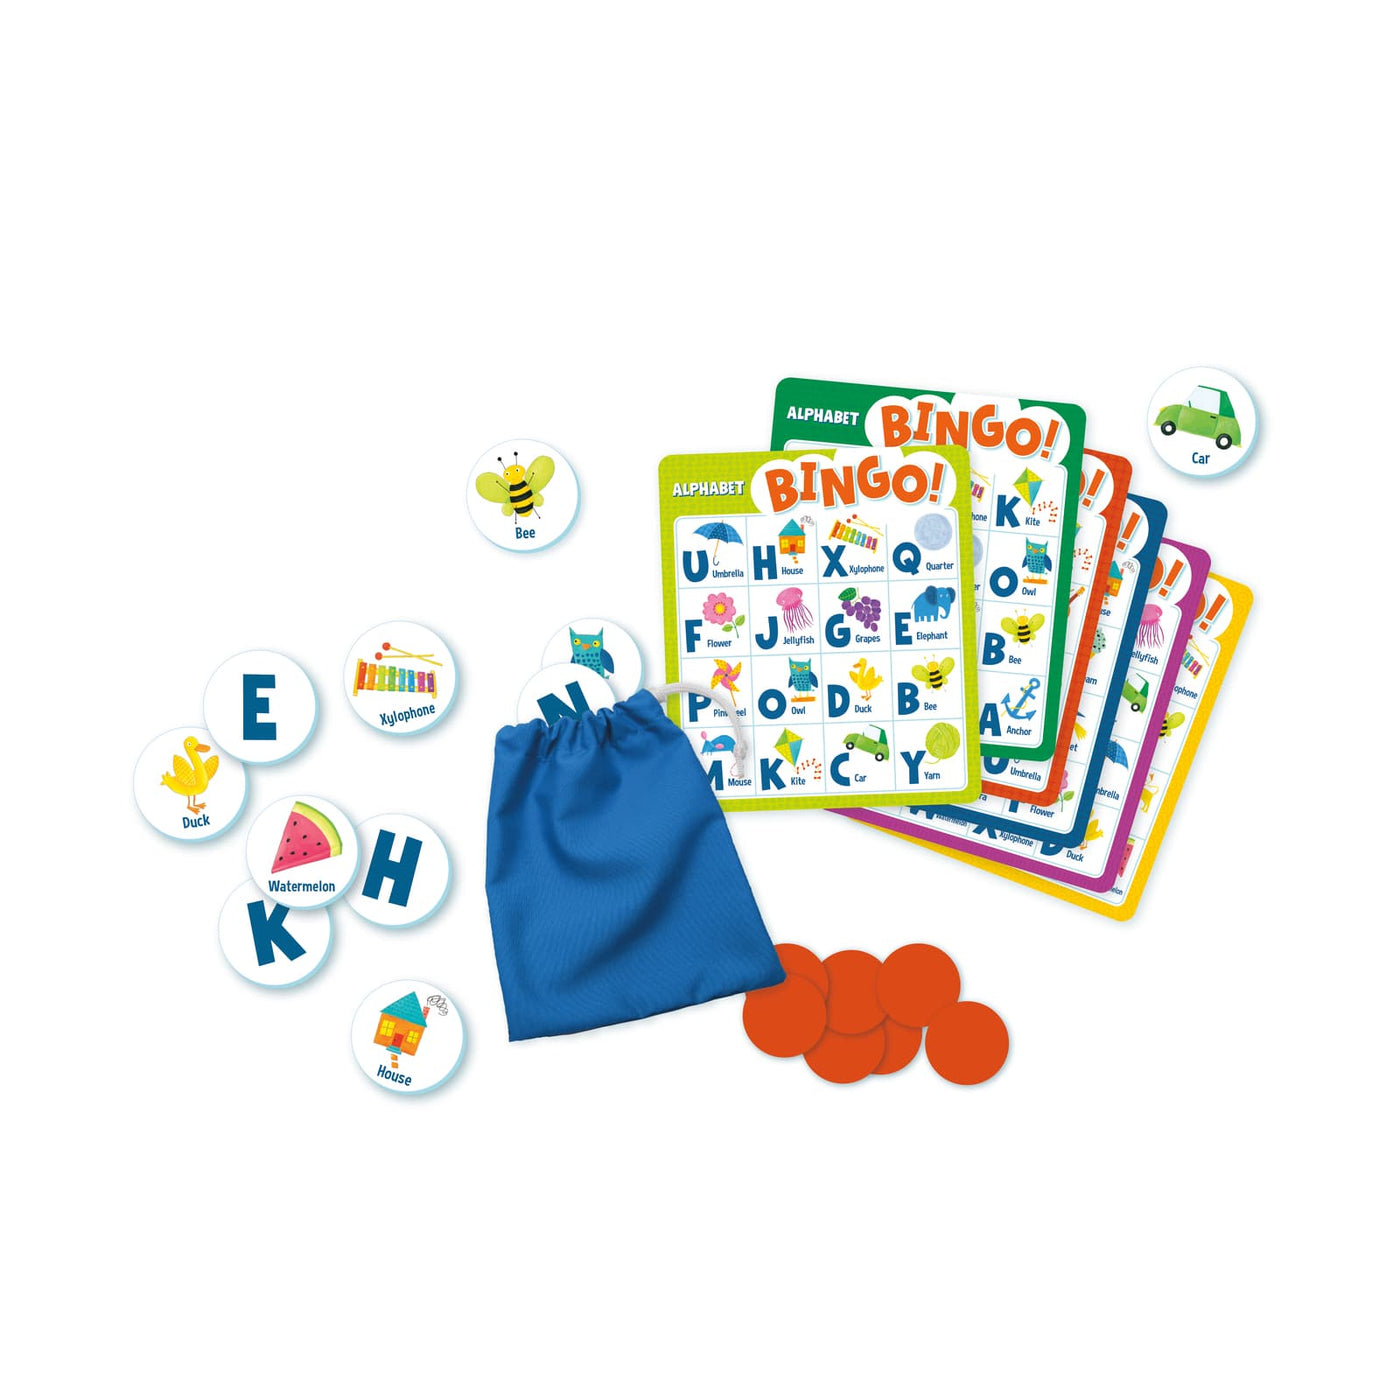 Peaceable Kingdom Alphabet Bingo game - contents